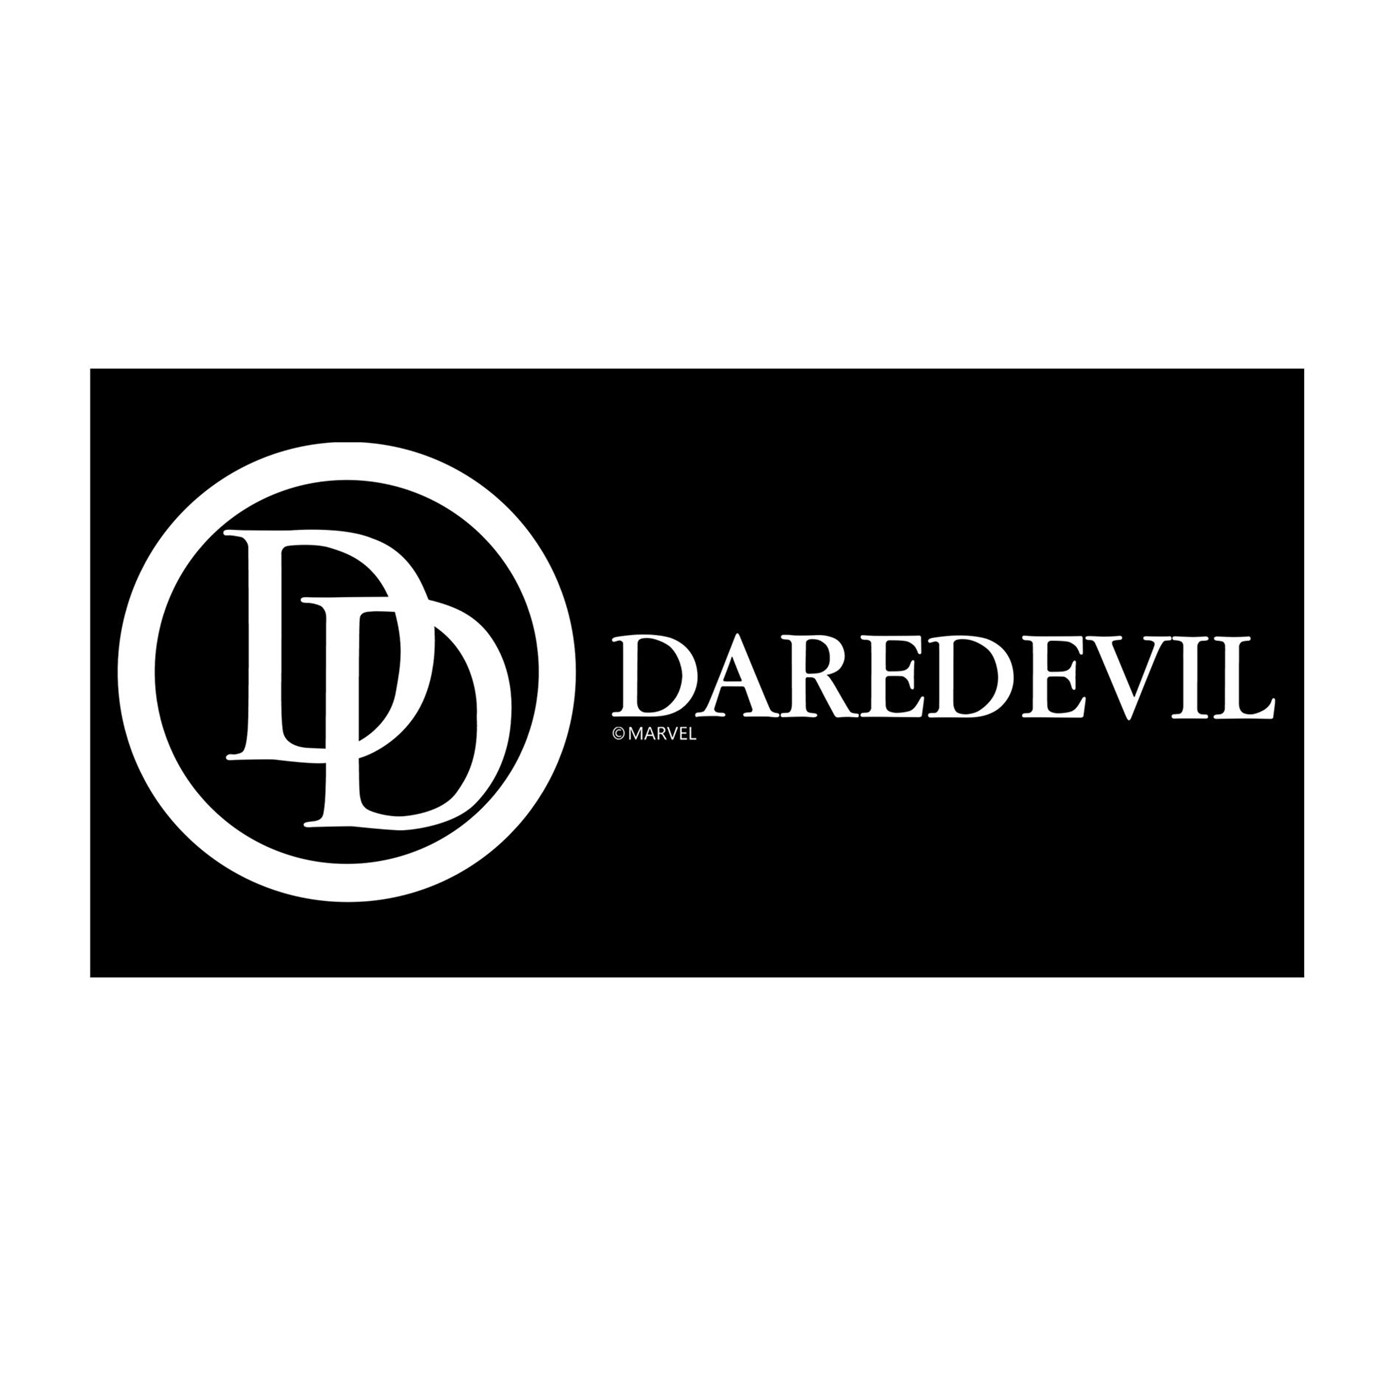 Daredevil Text & Symbol White Decal